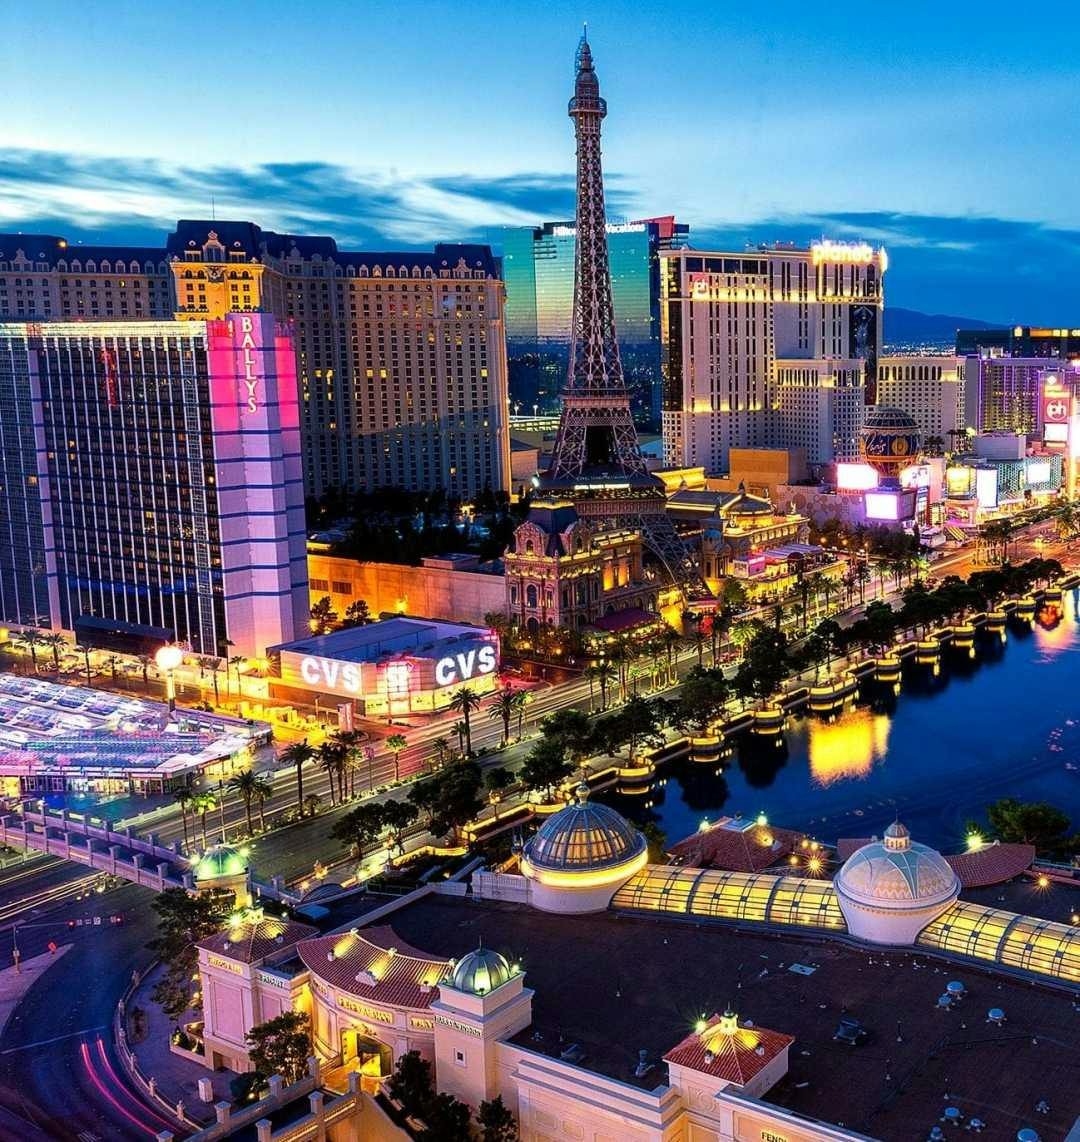 An aerial view of the Las Vegas strip